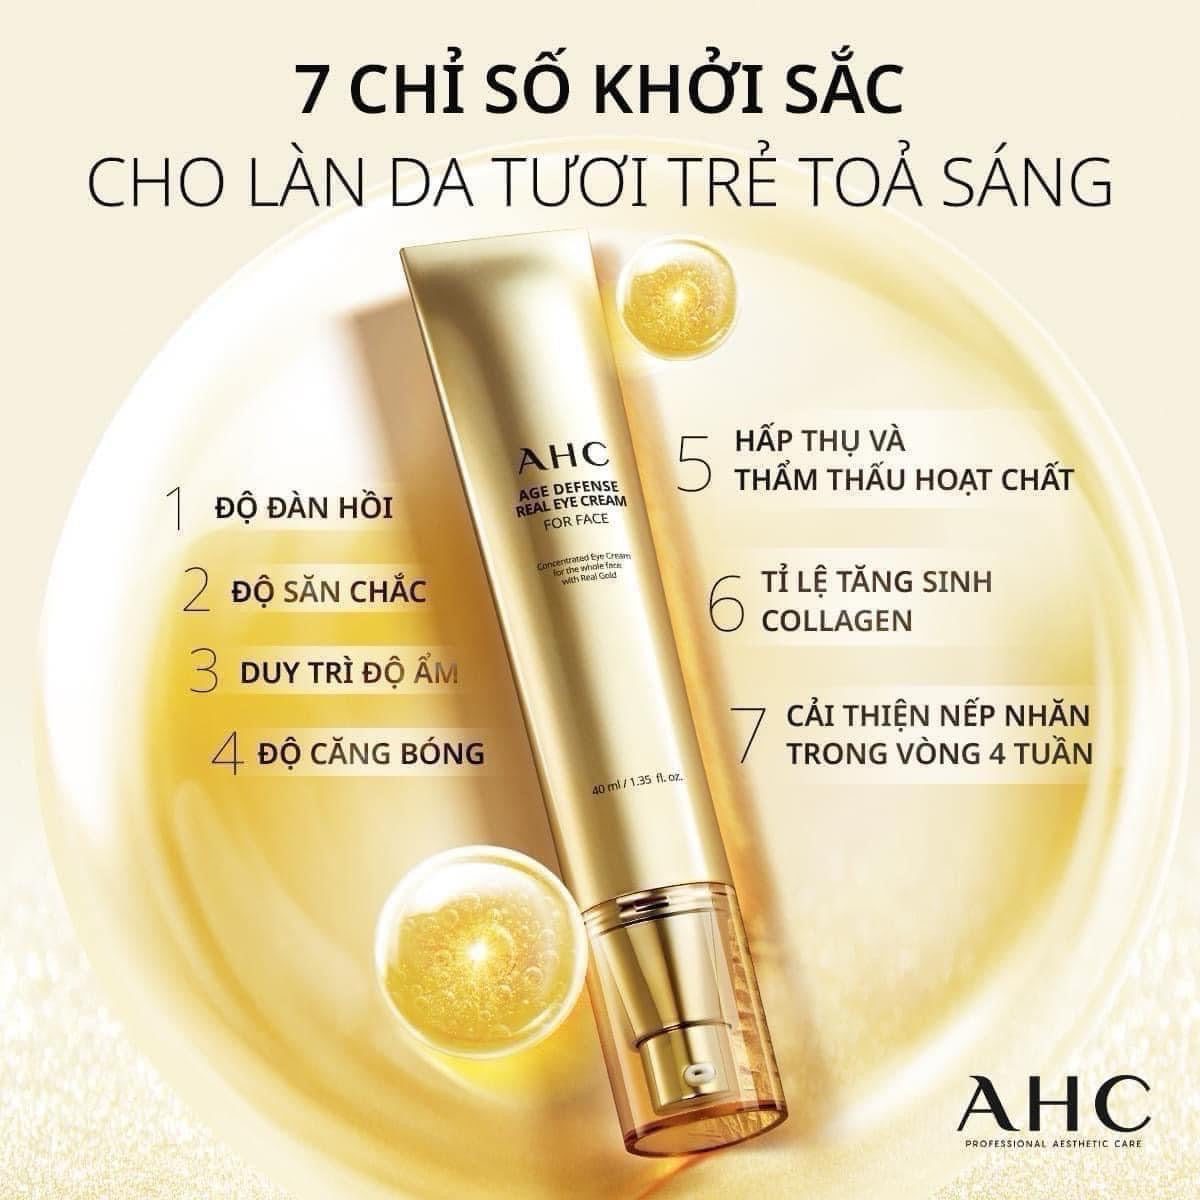 Kem mắt AHC Age Defense Real Eye Cream For Face 40ml